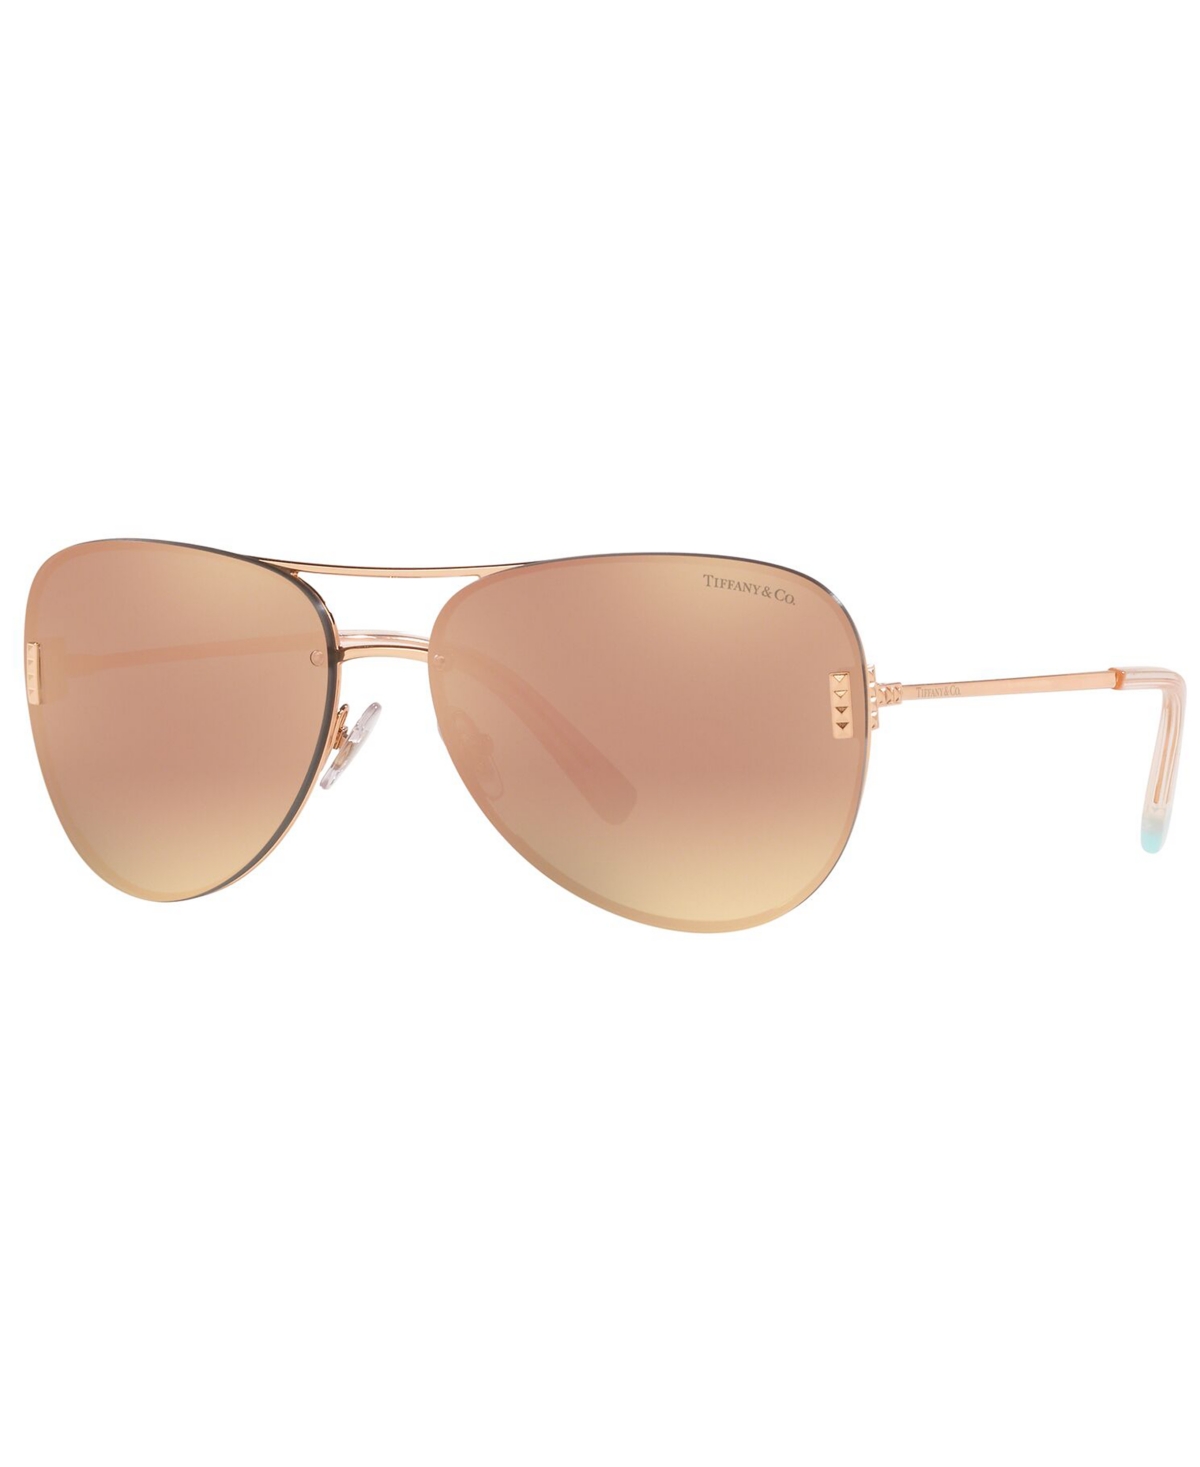 Tiffany & Co Sunglasses, Tf3066 In Rubedo,grey Mirror Rose Gold